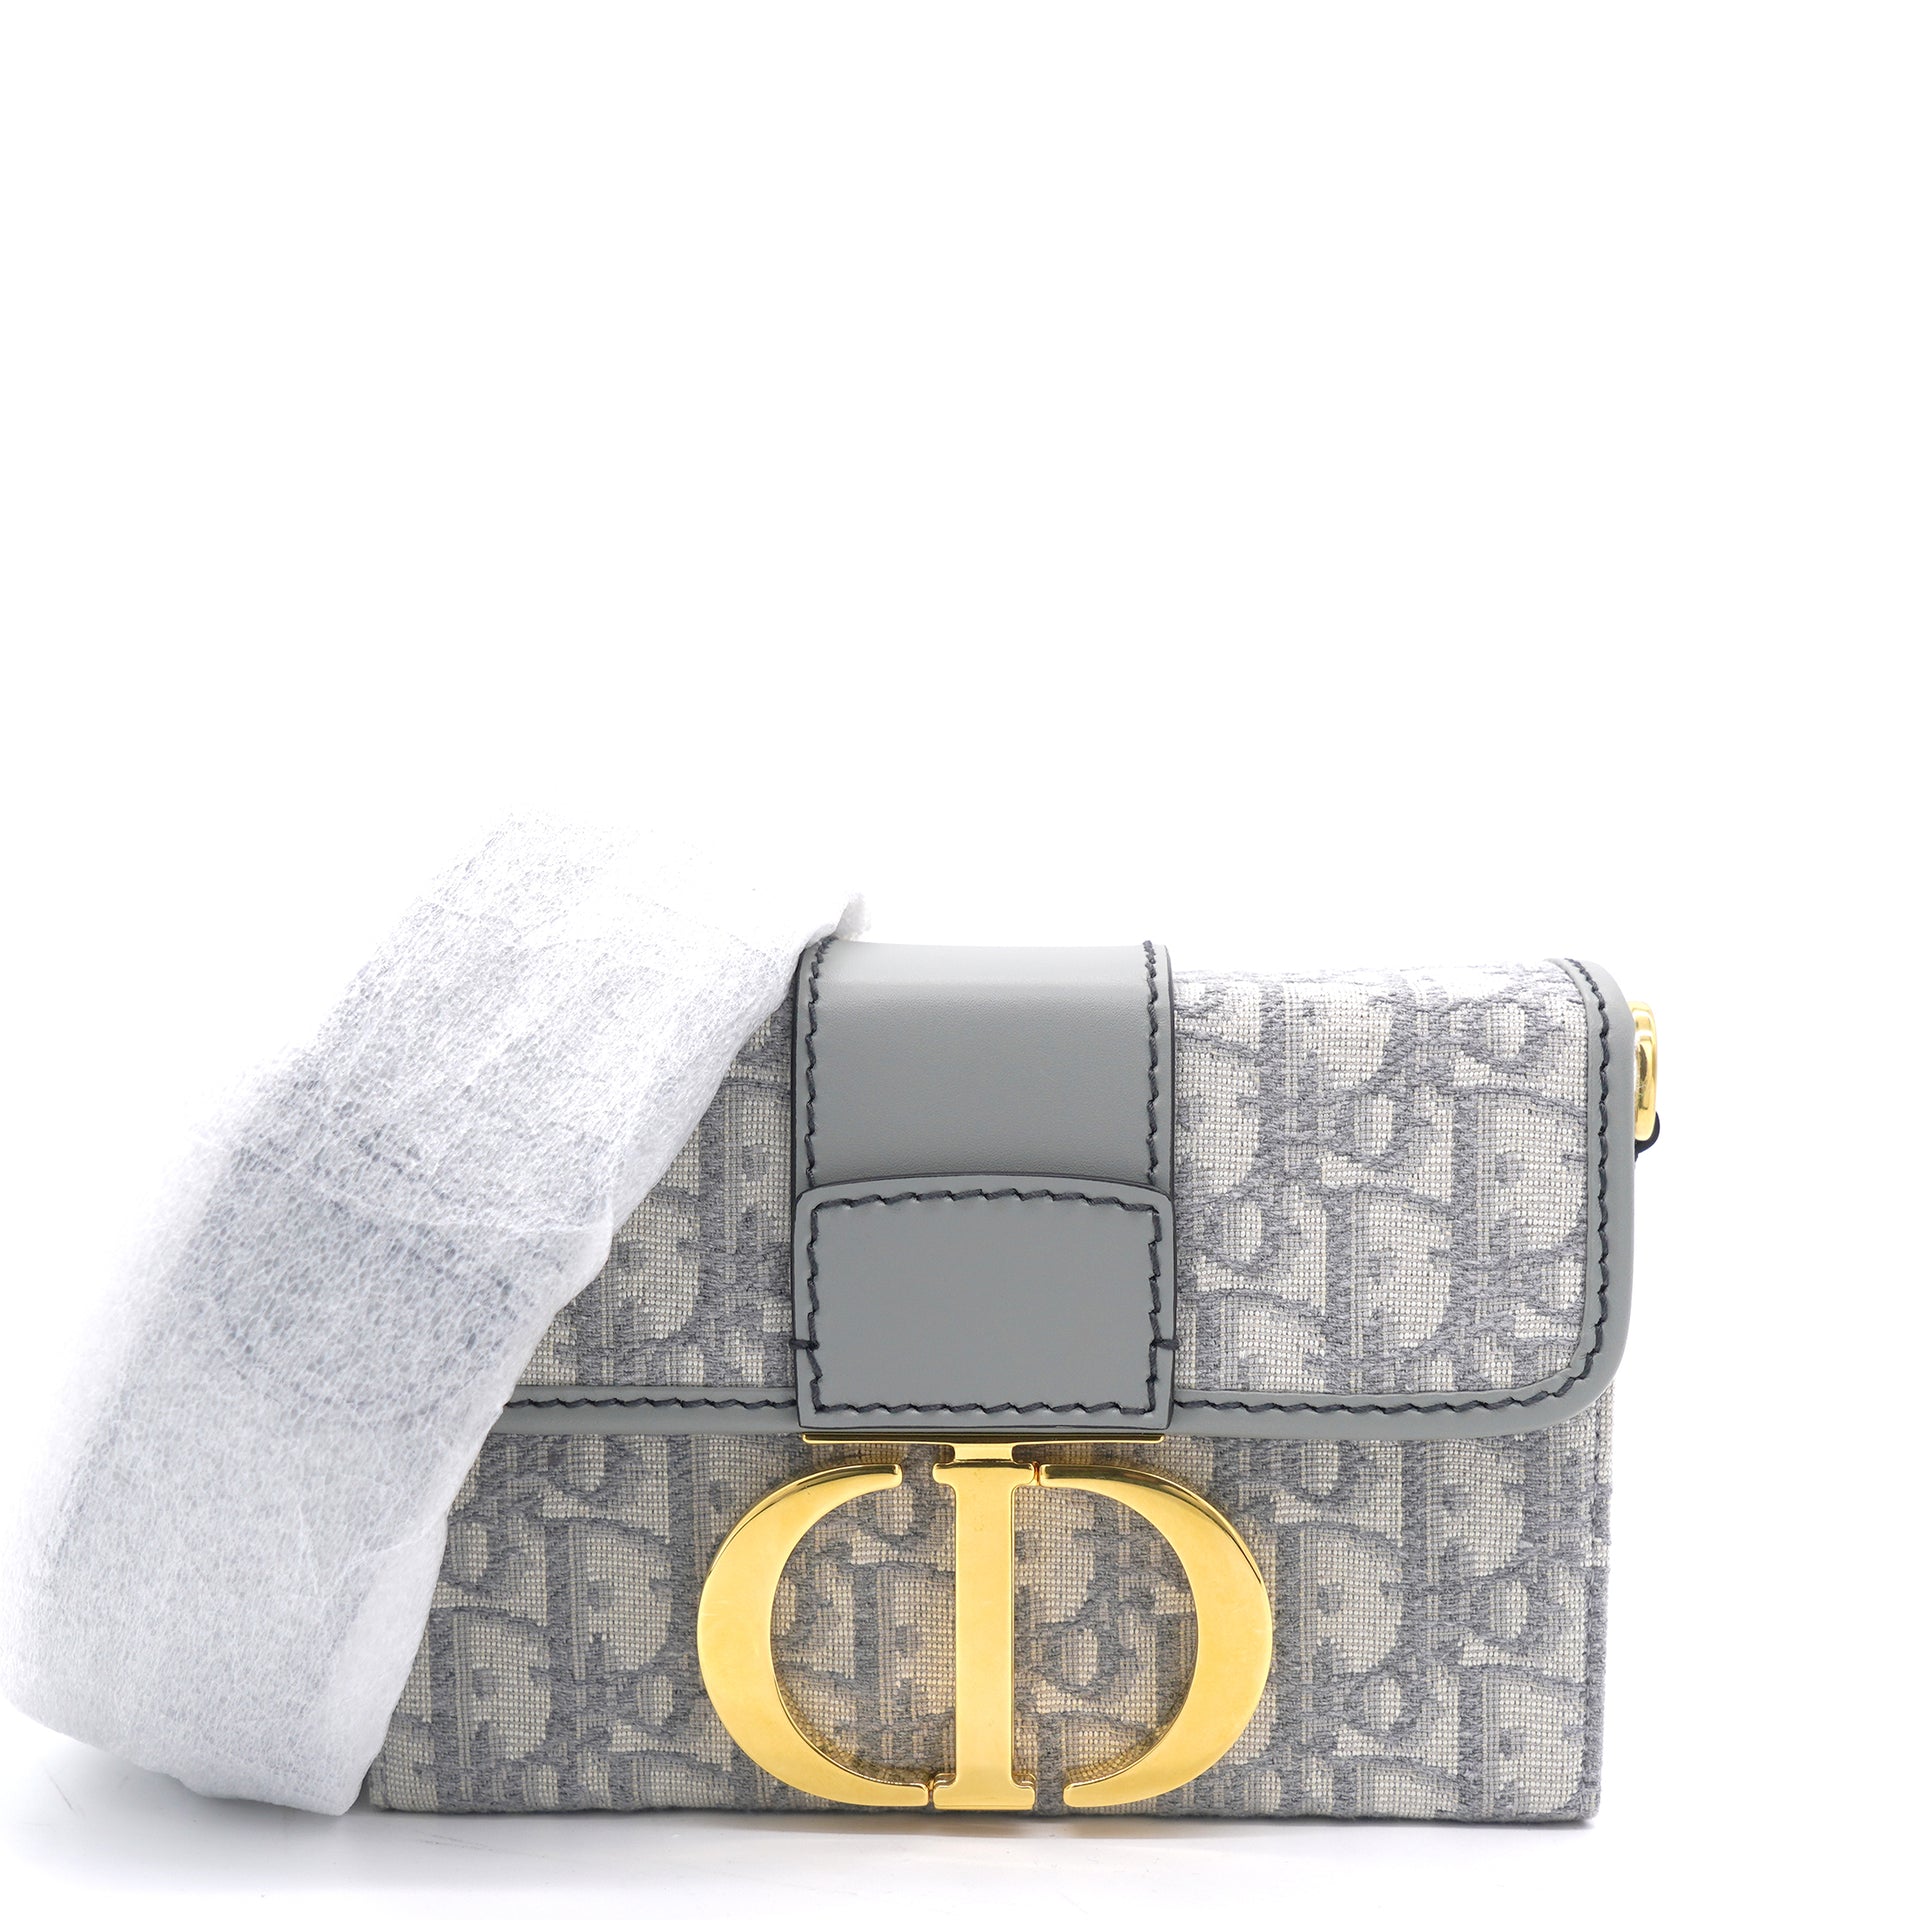 Dior 30 Montaigne BOX VS Regular comparison with reviews and Chanel Boy bag  #dior30montaigne 